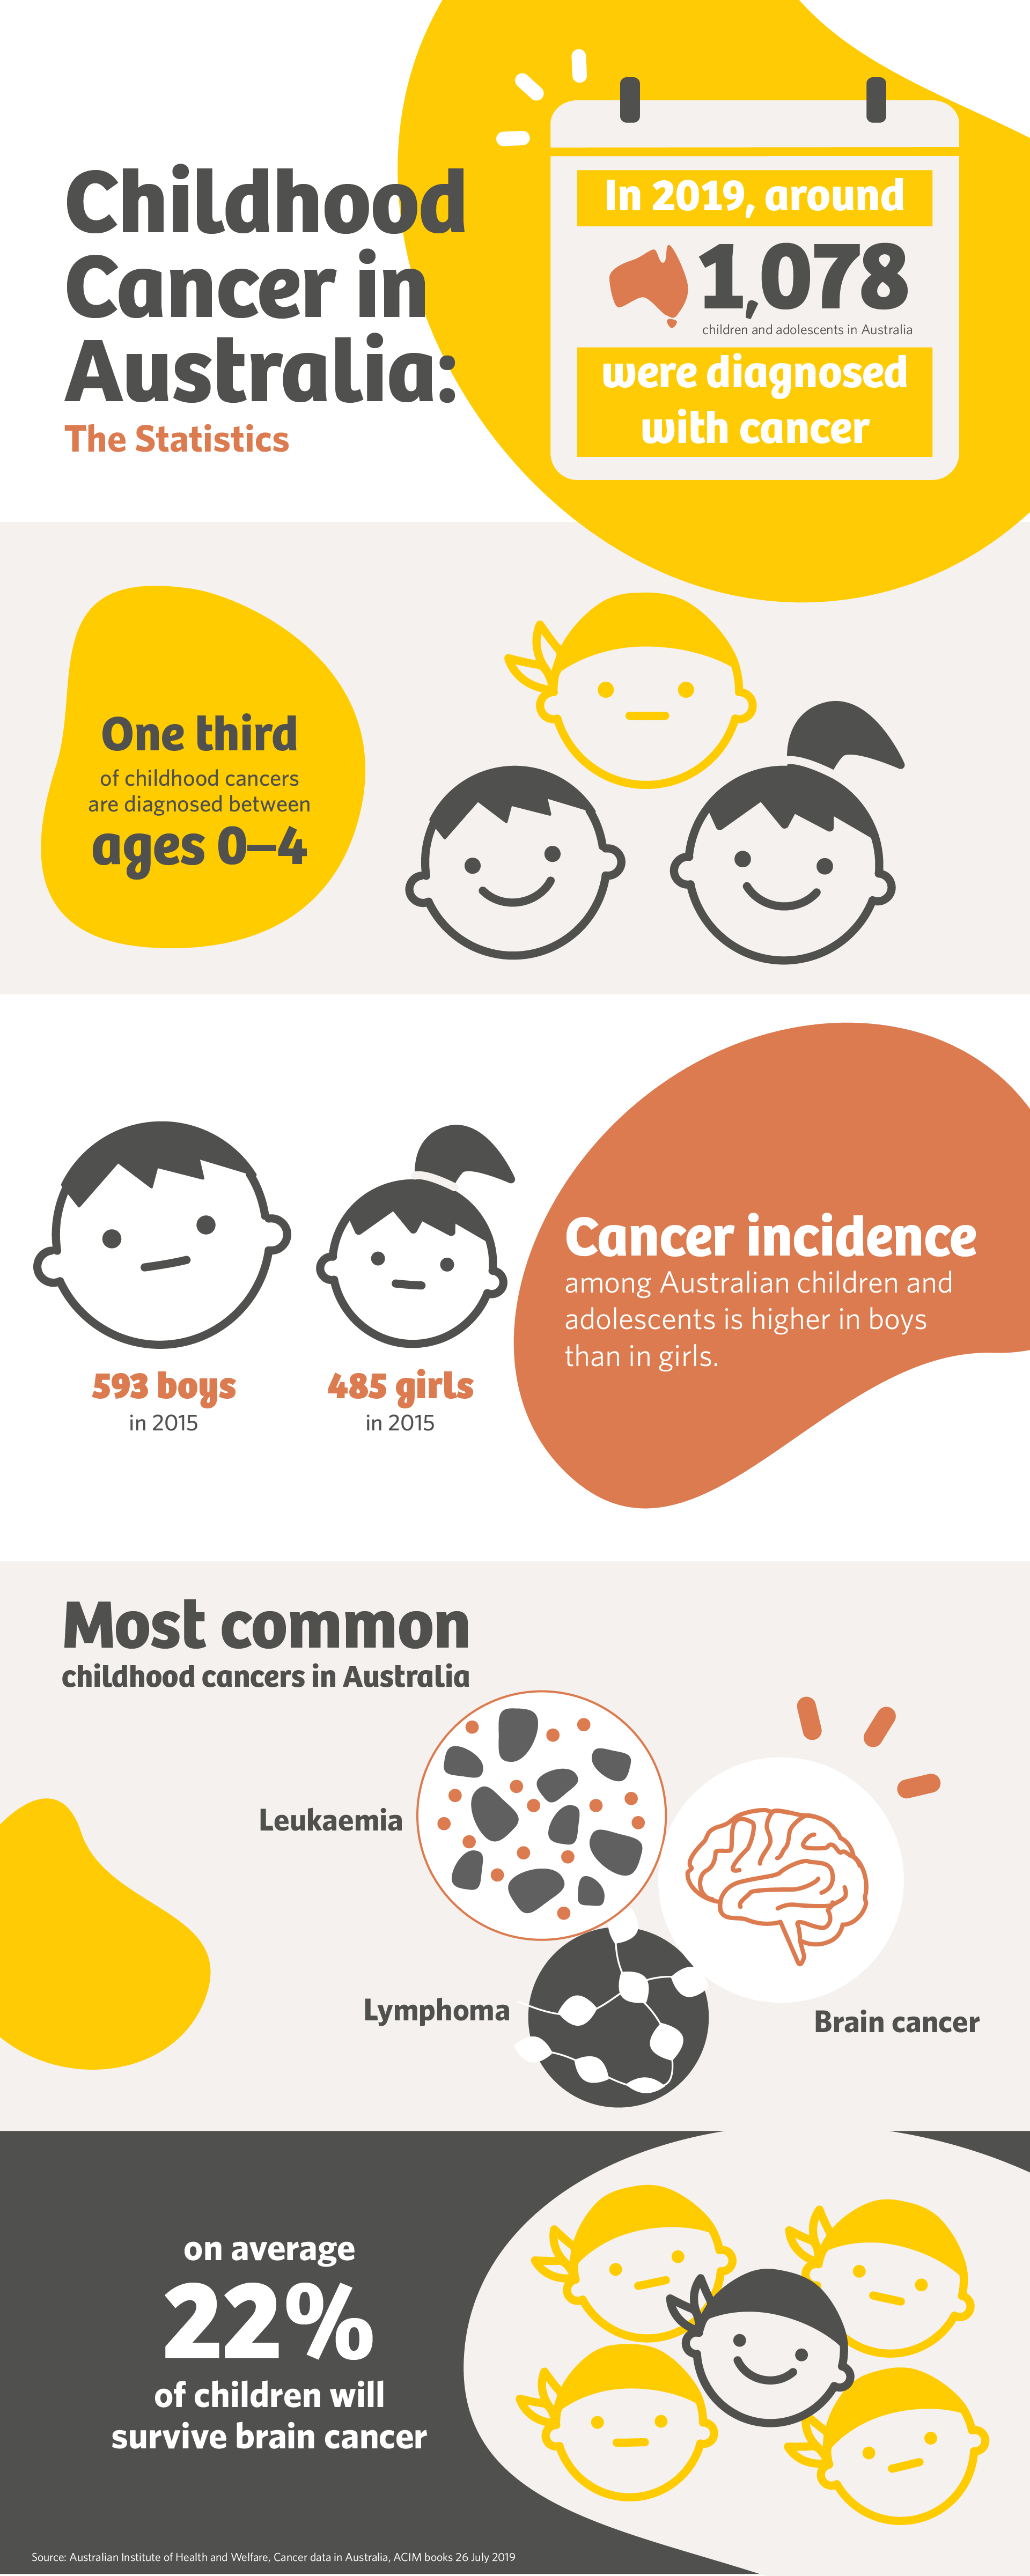 Childhood Cancer Help Us Change The Statistics And Improve Lives